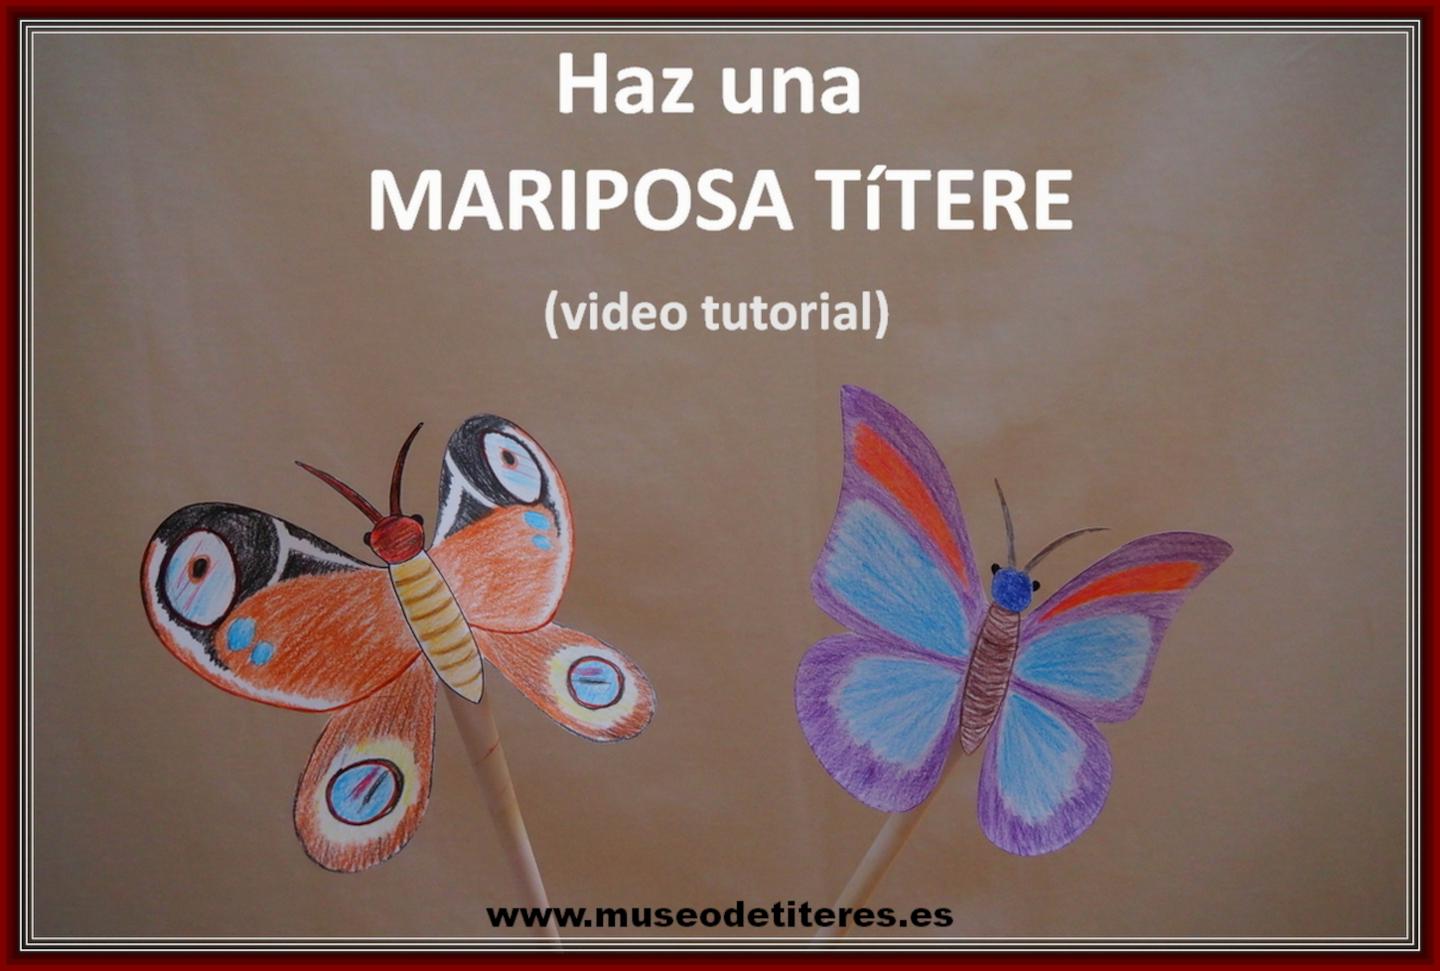 HAZ una Mariposa títere (video)